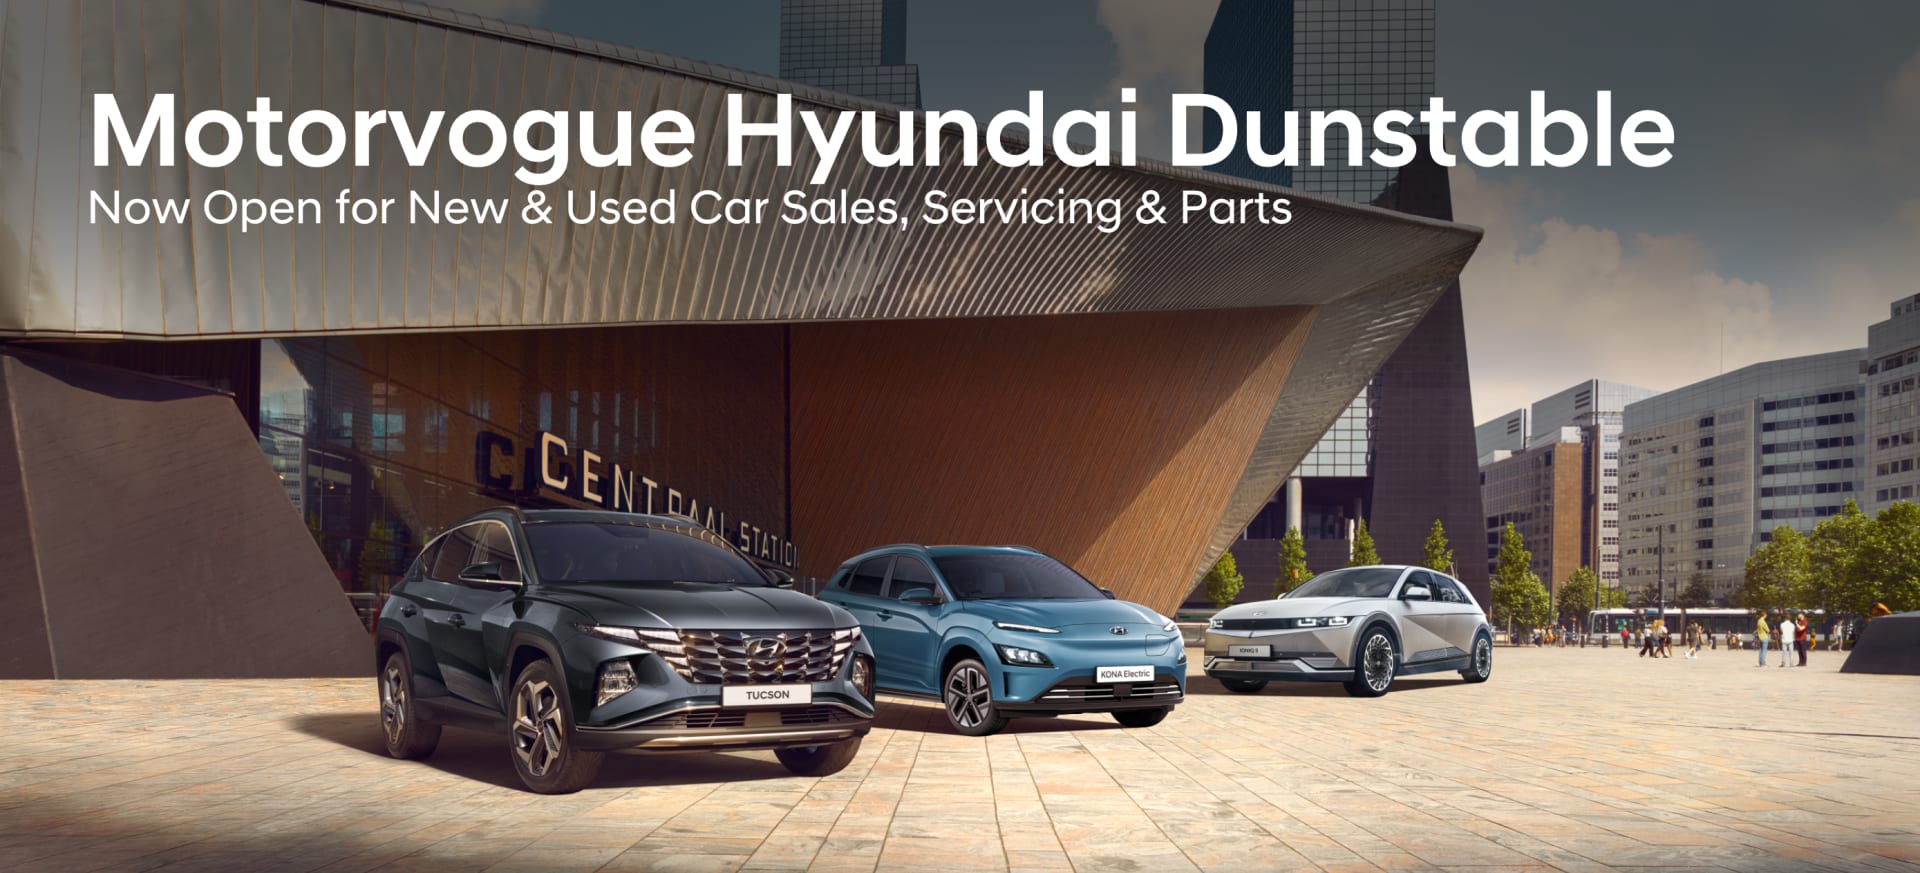 Motorvogue Hyundai Dunstable